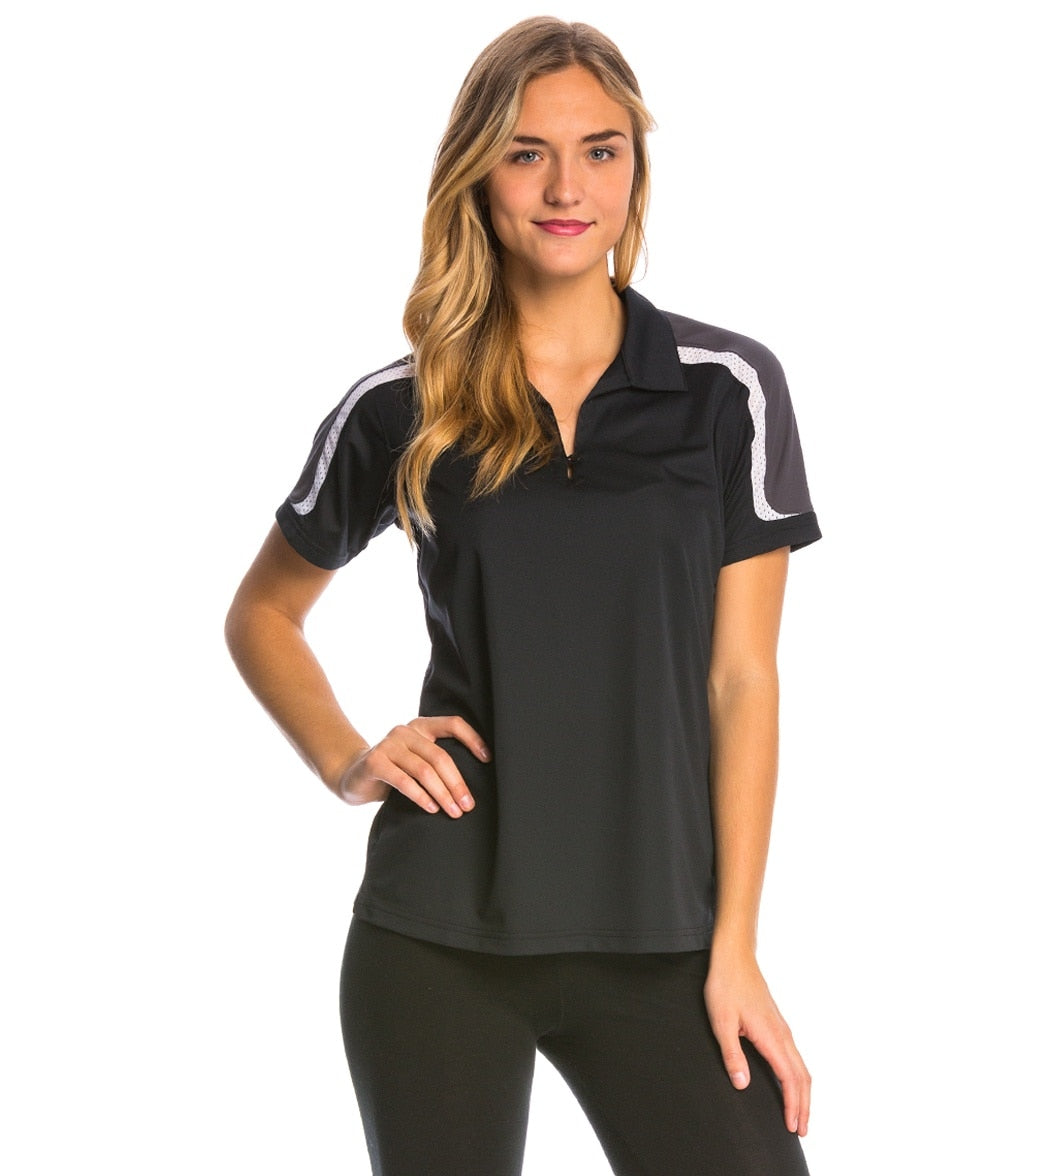 Women's Tech Polo Shirt - Black/Iron Grey/White 3Xl Polyester - Swimoutlet.com